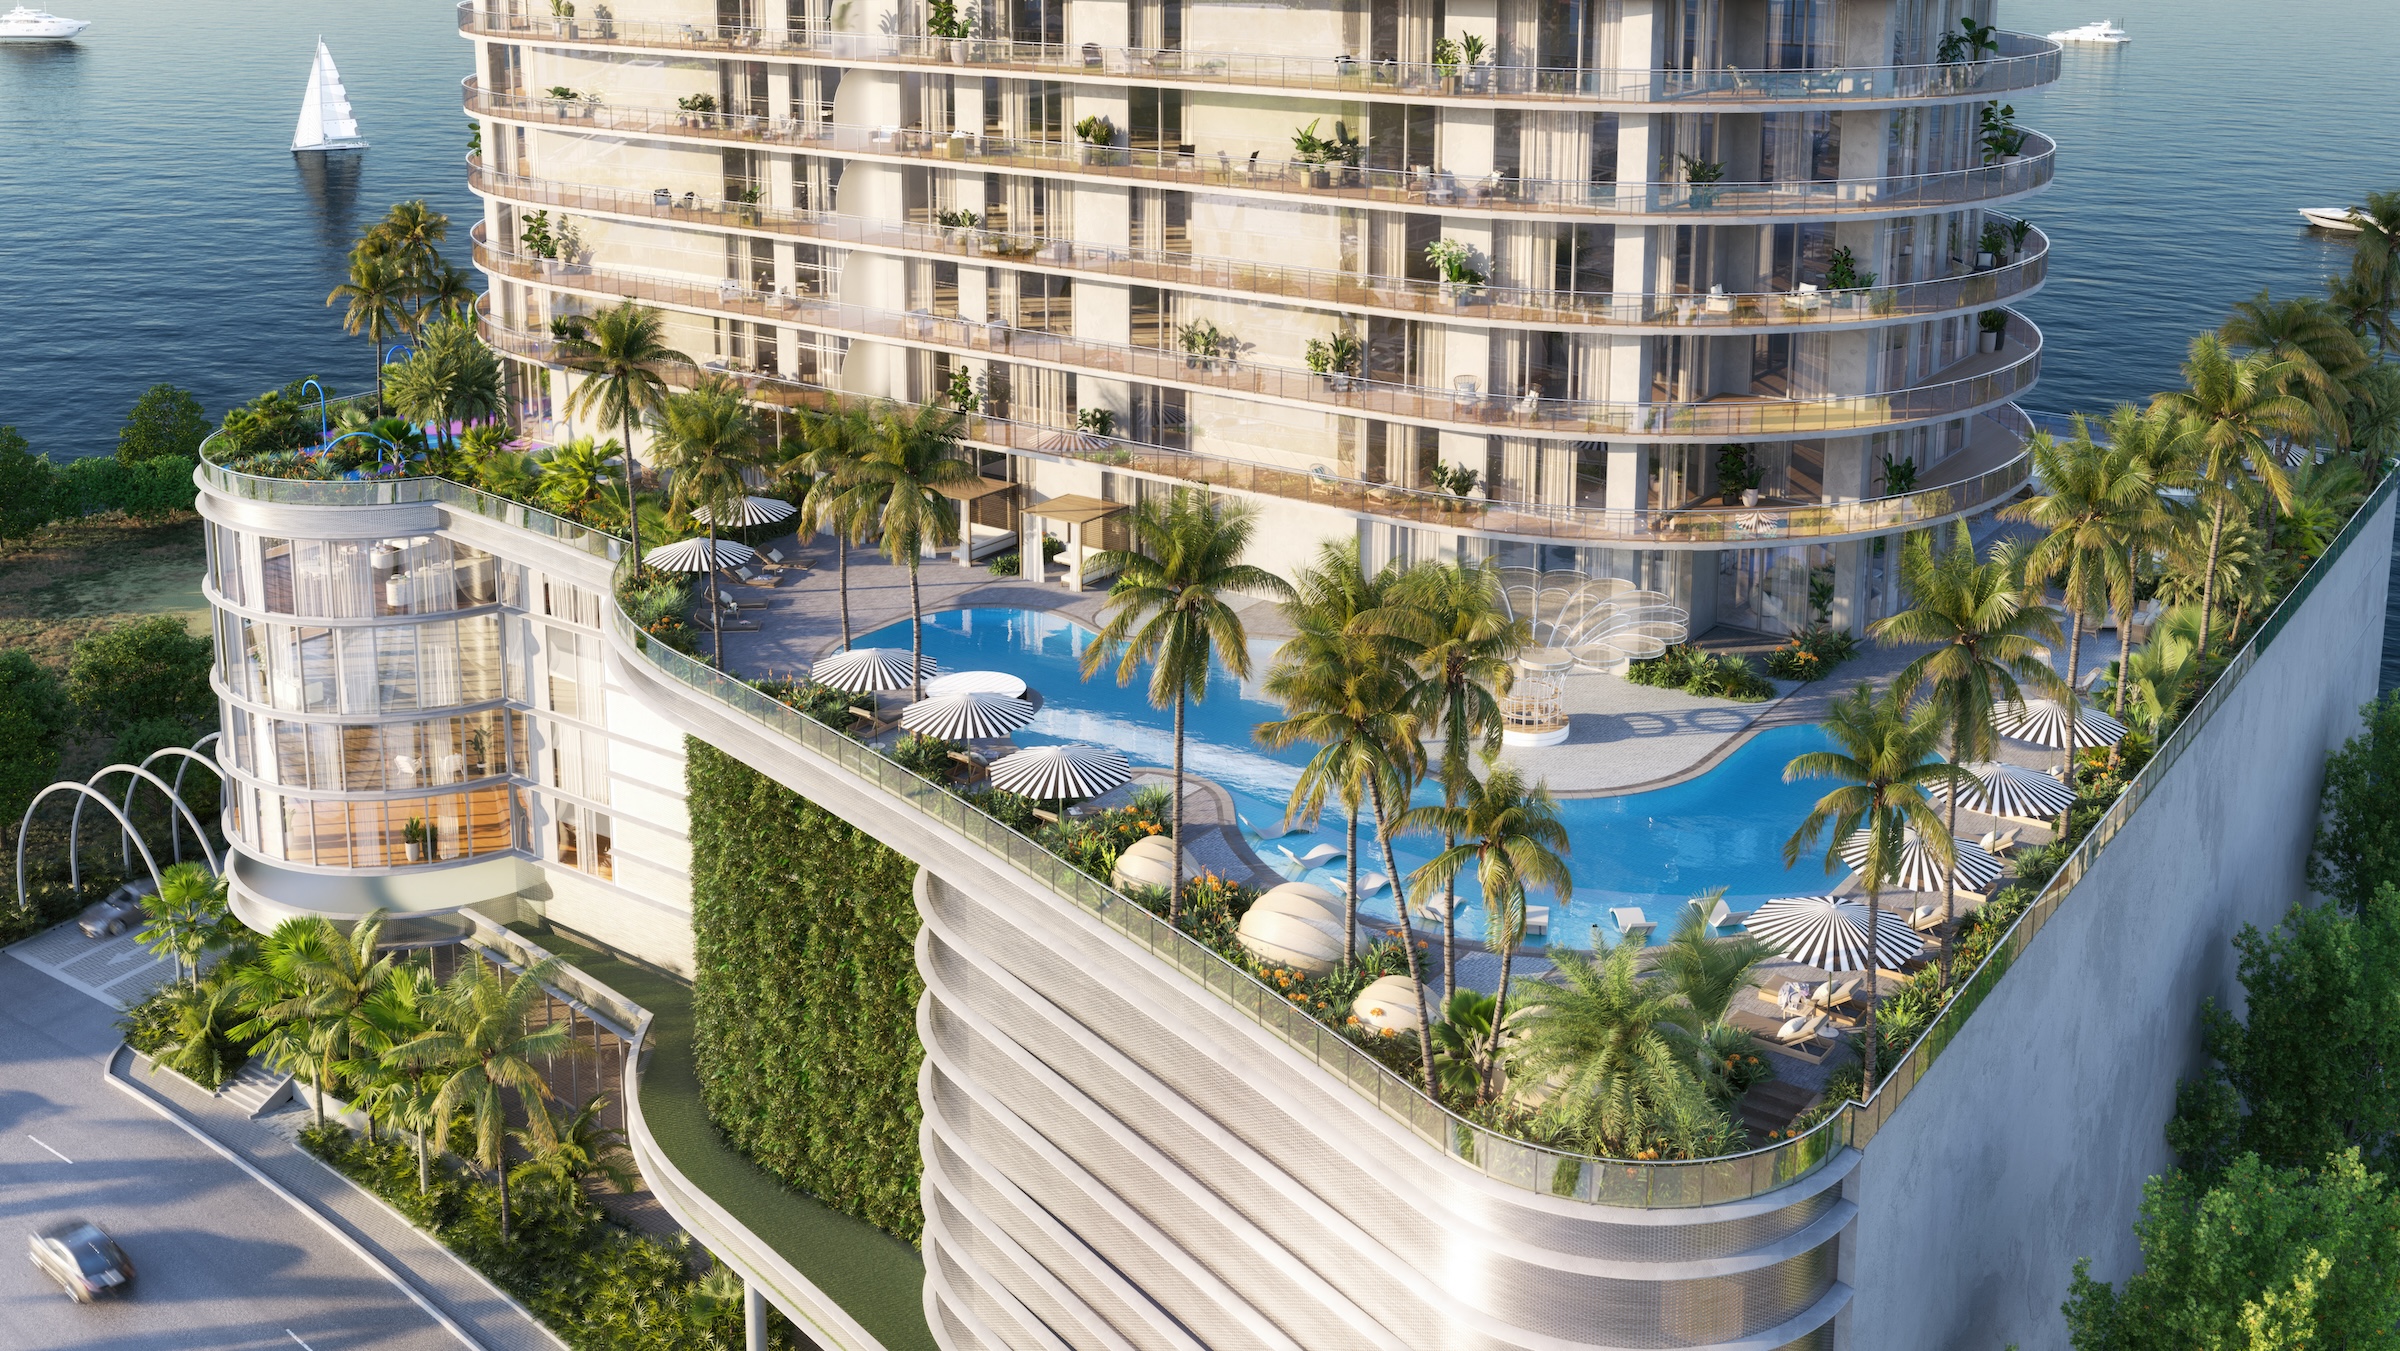 Miami luxury condominium tower Continuum Club & Residences will have more than 50,000 sf of amenities